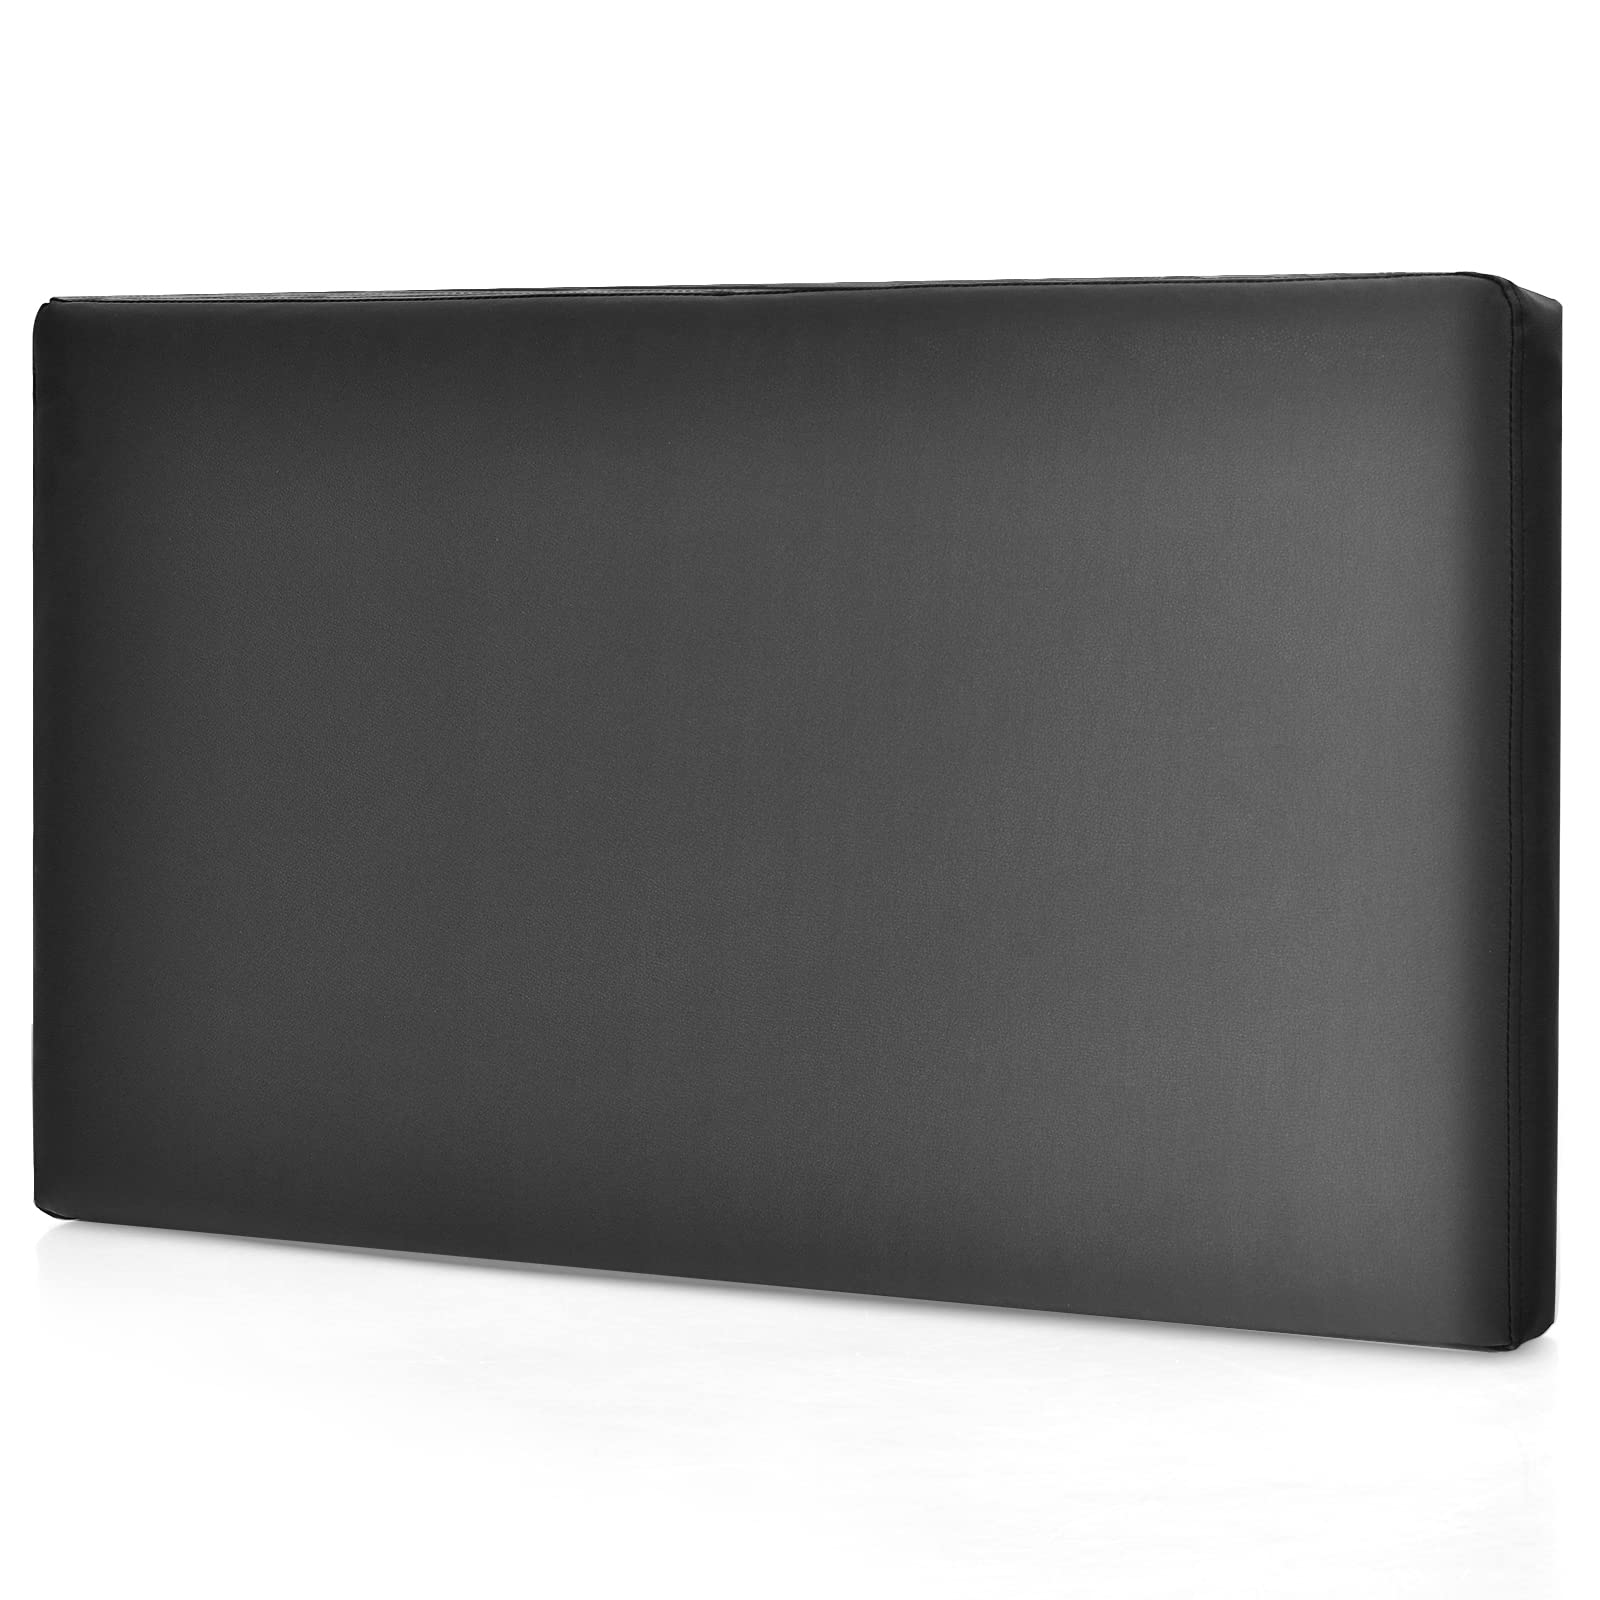 Giantex Upholstered Headboard, Wall-Mounted Sponge Padded Headboard with PU Leather Surface, 35"(L) x 21"(W)